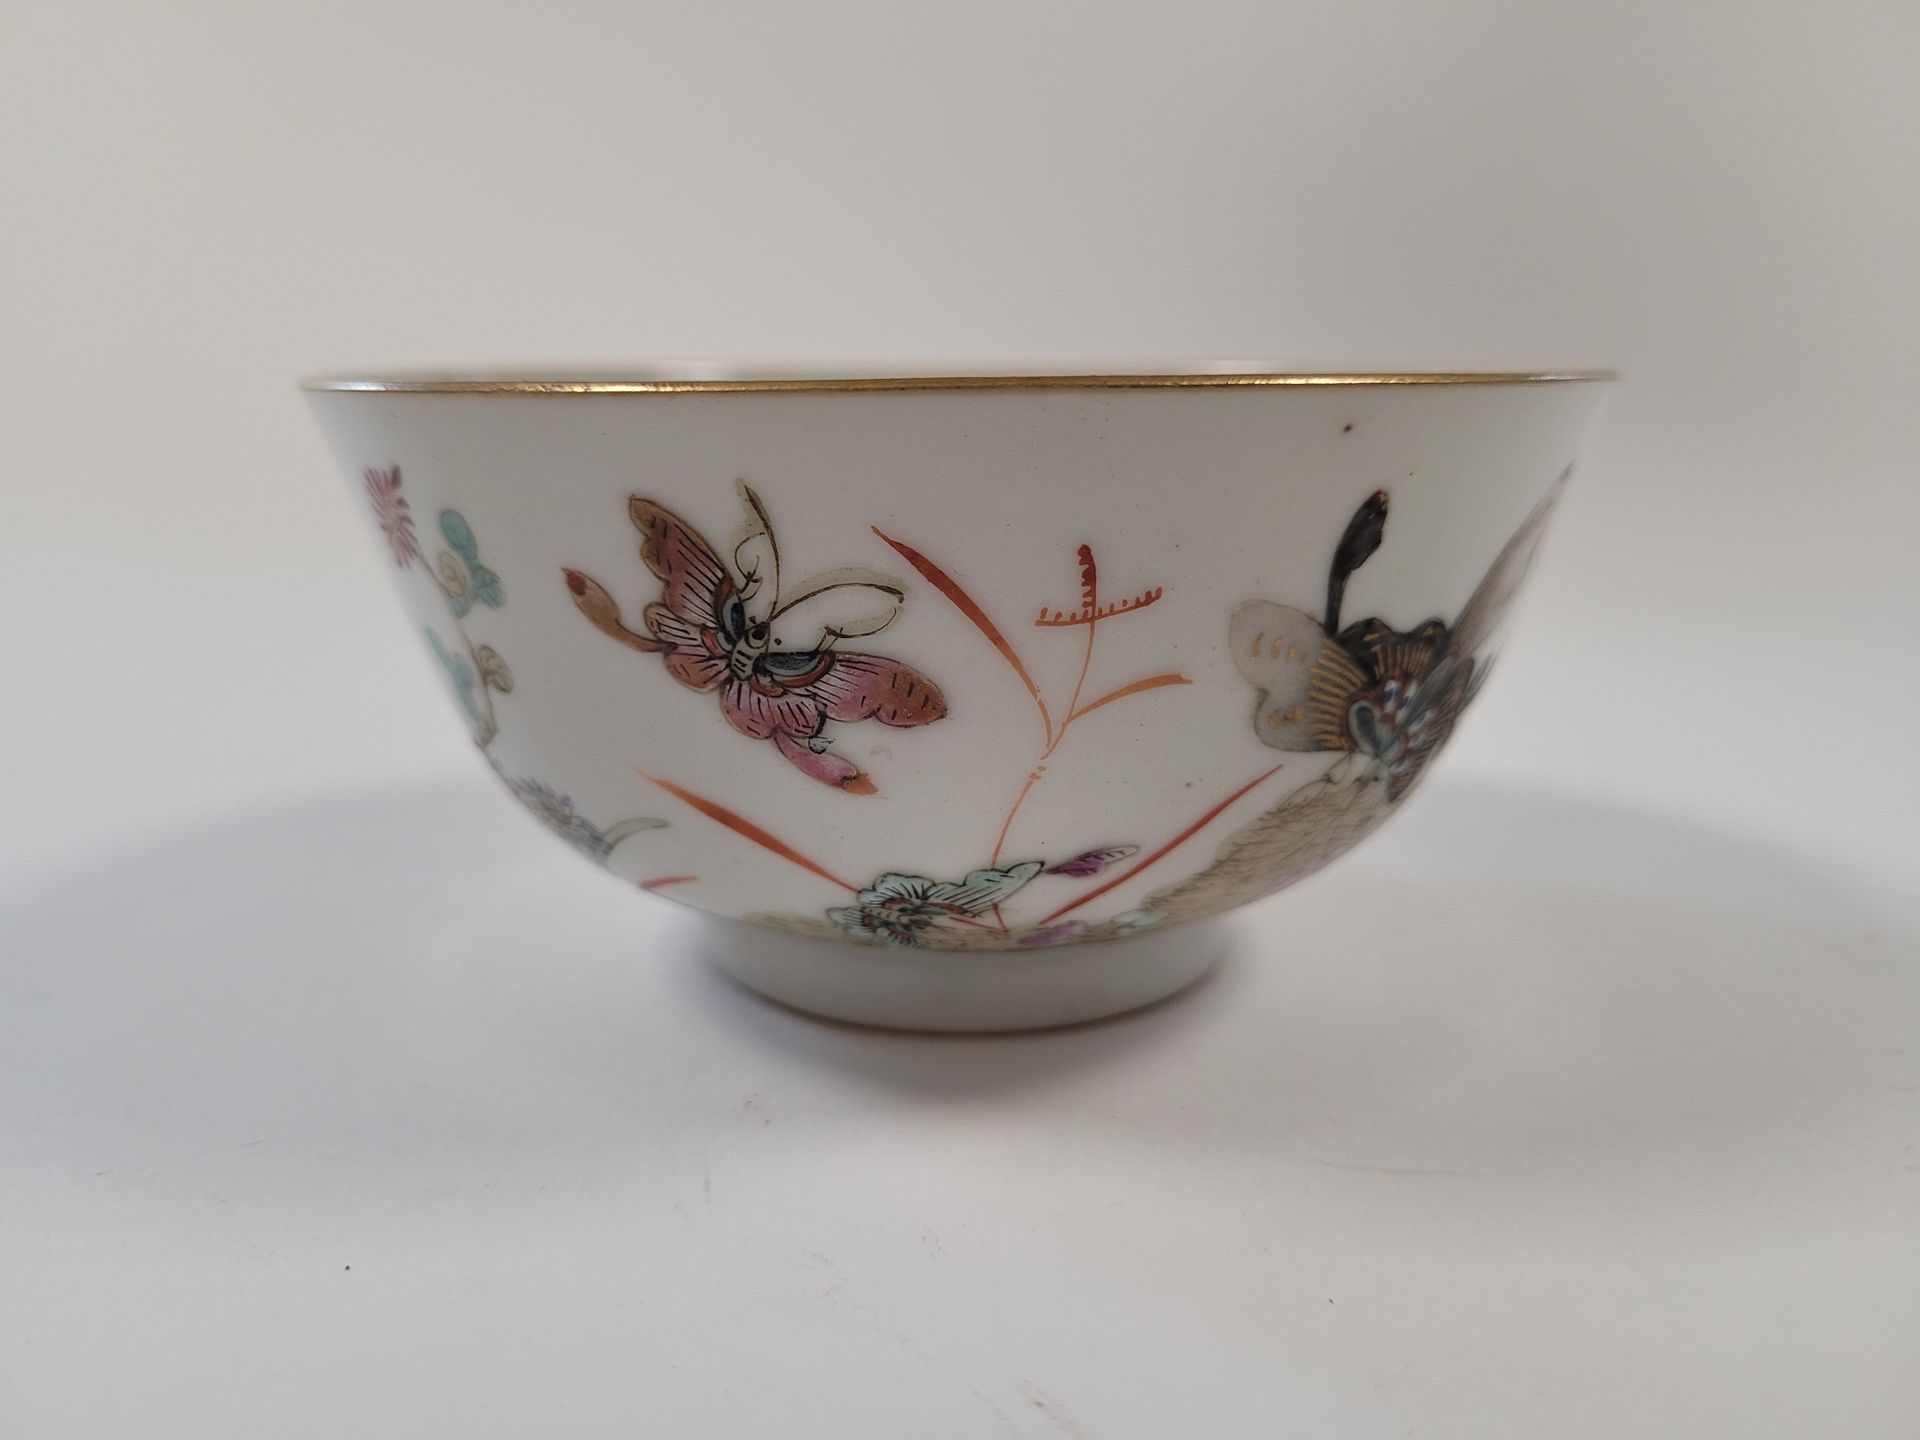 Null Cuenco de porcelana, China, siglo
XIXDecoración policromada de mariposas en&hellip;